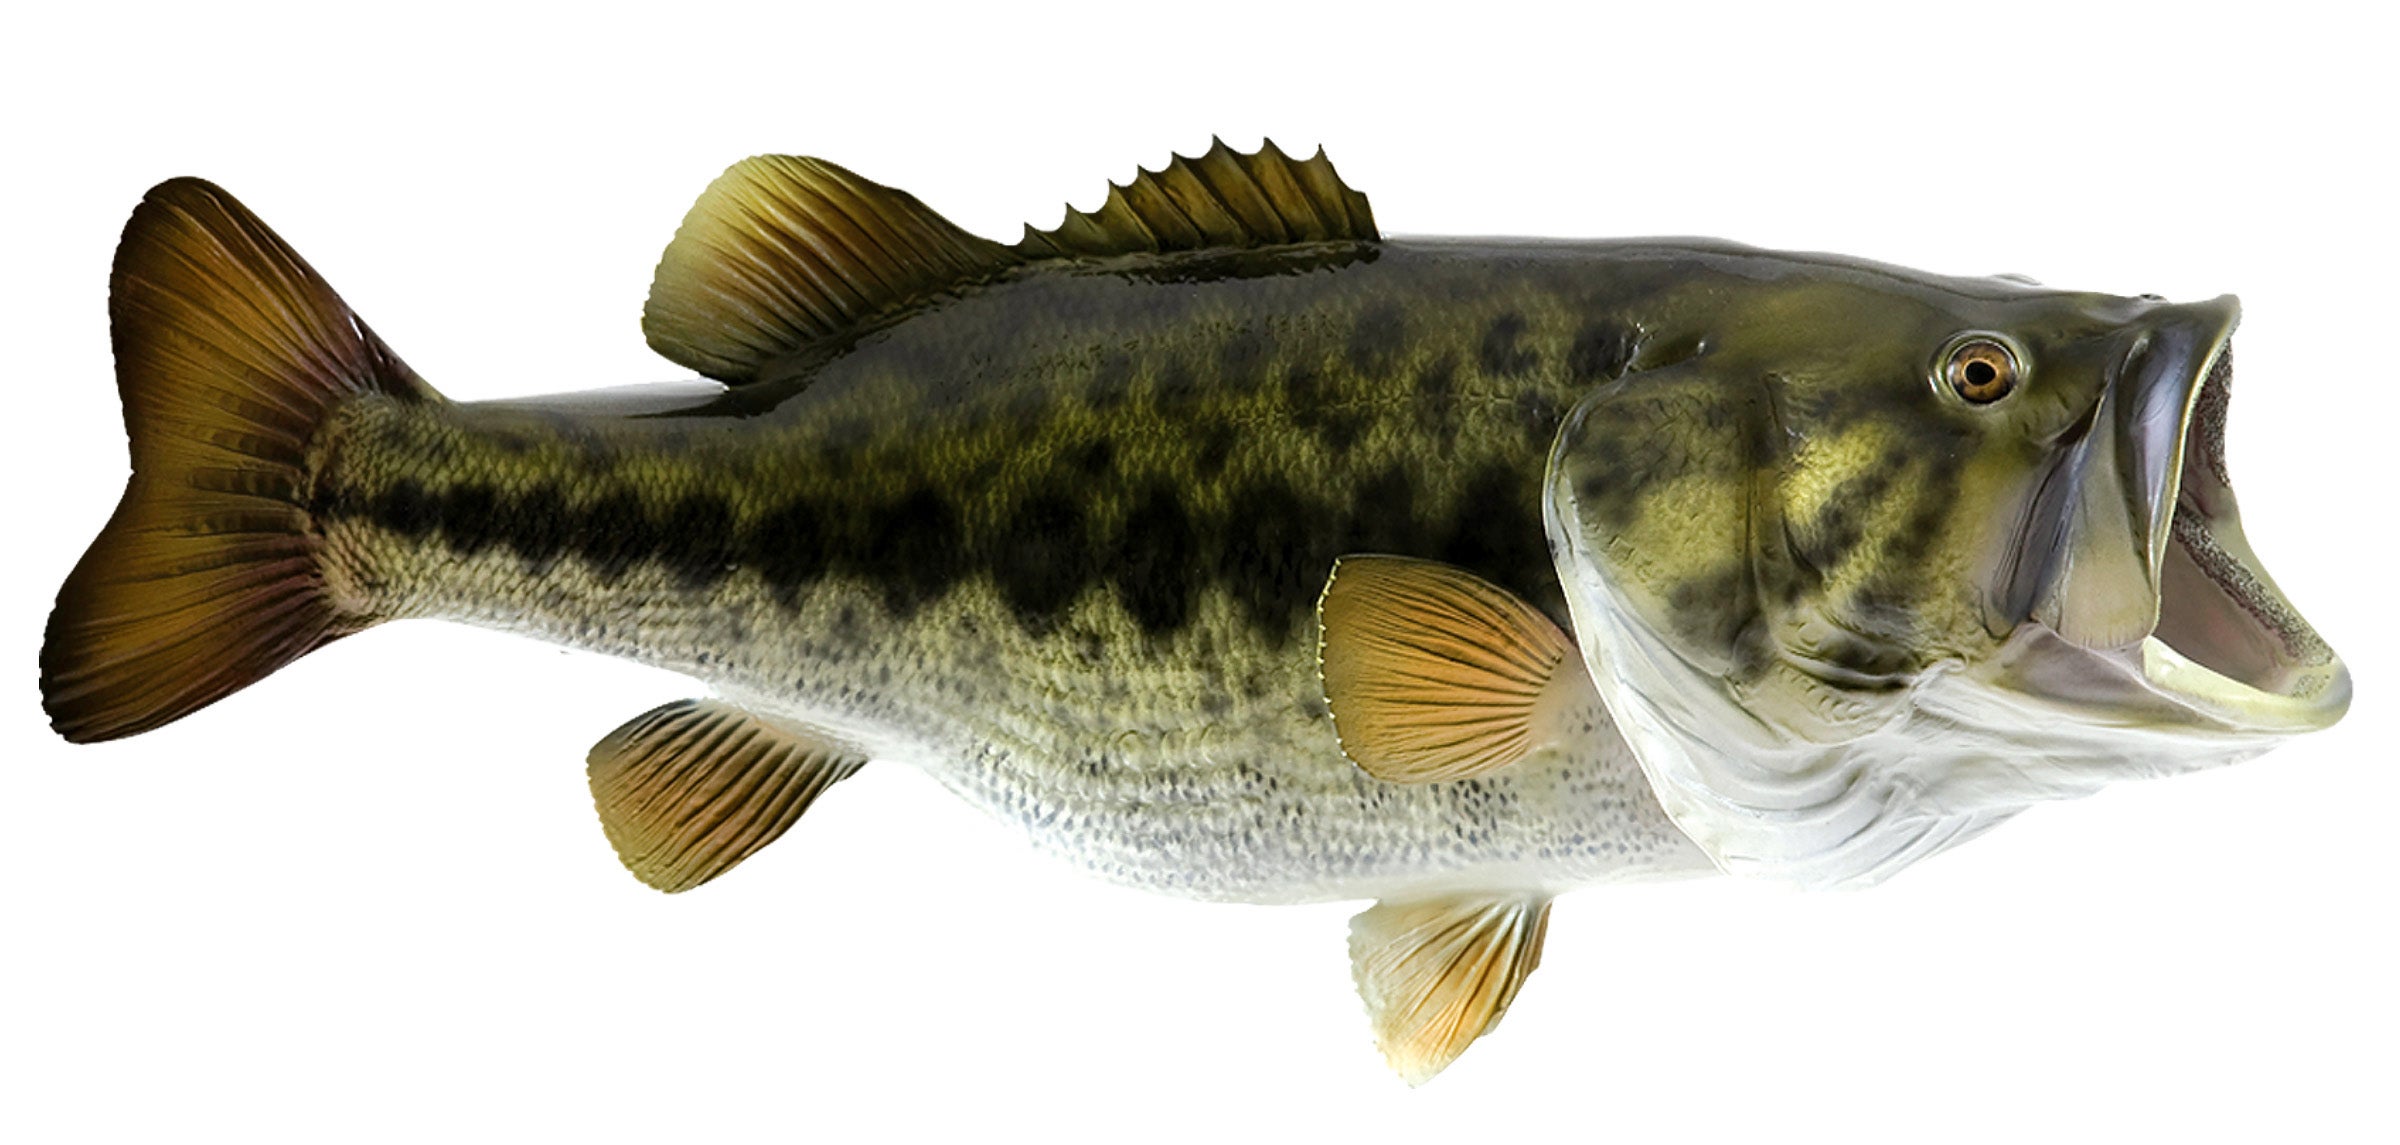 Рыба басс. Largemouth Bass рыба. Большеротый окунь басс. Большеротый окунь ареал. Окунь черный Большеротый.